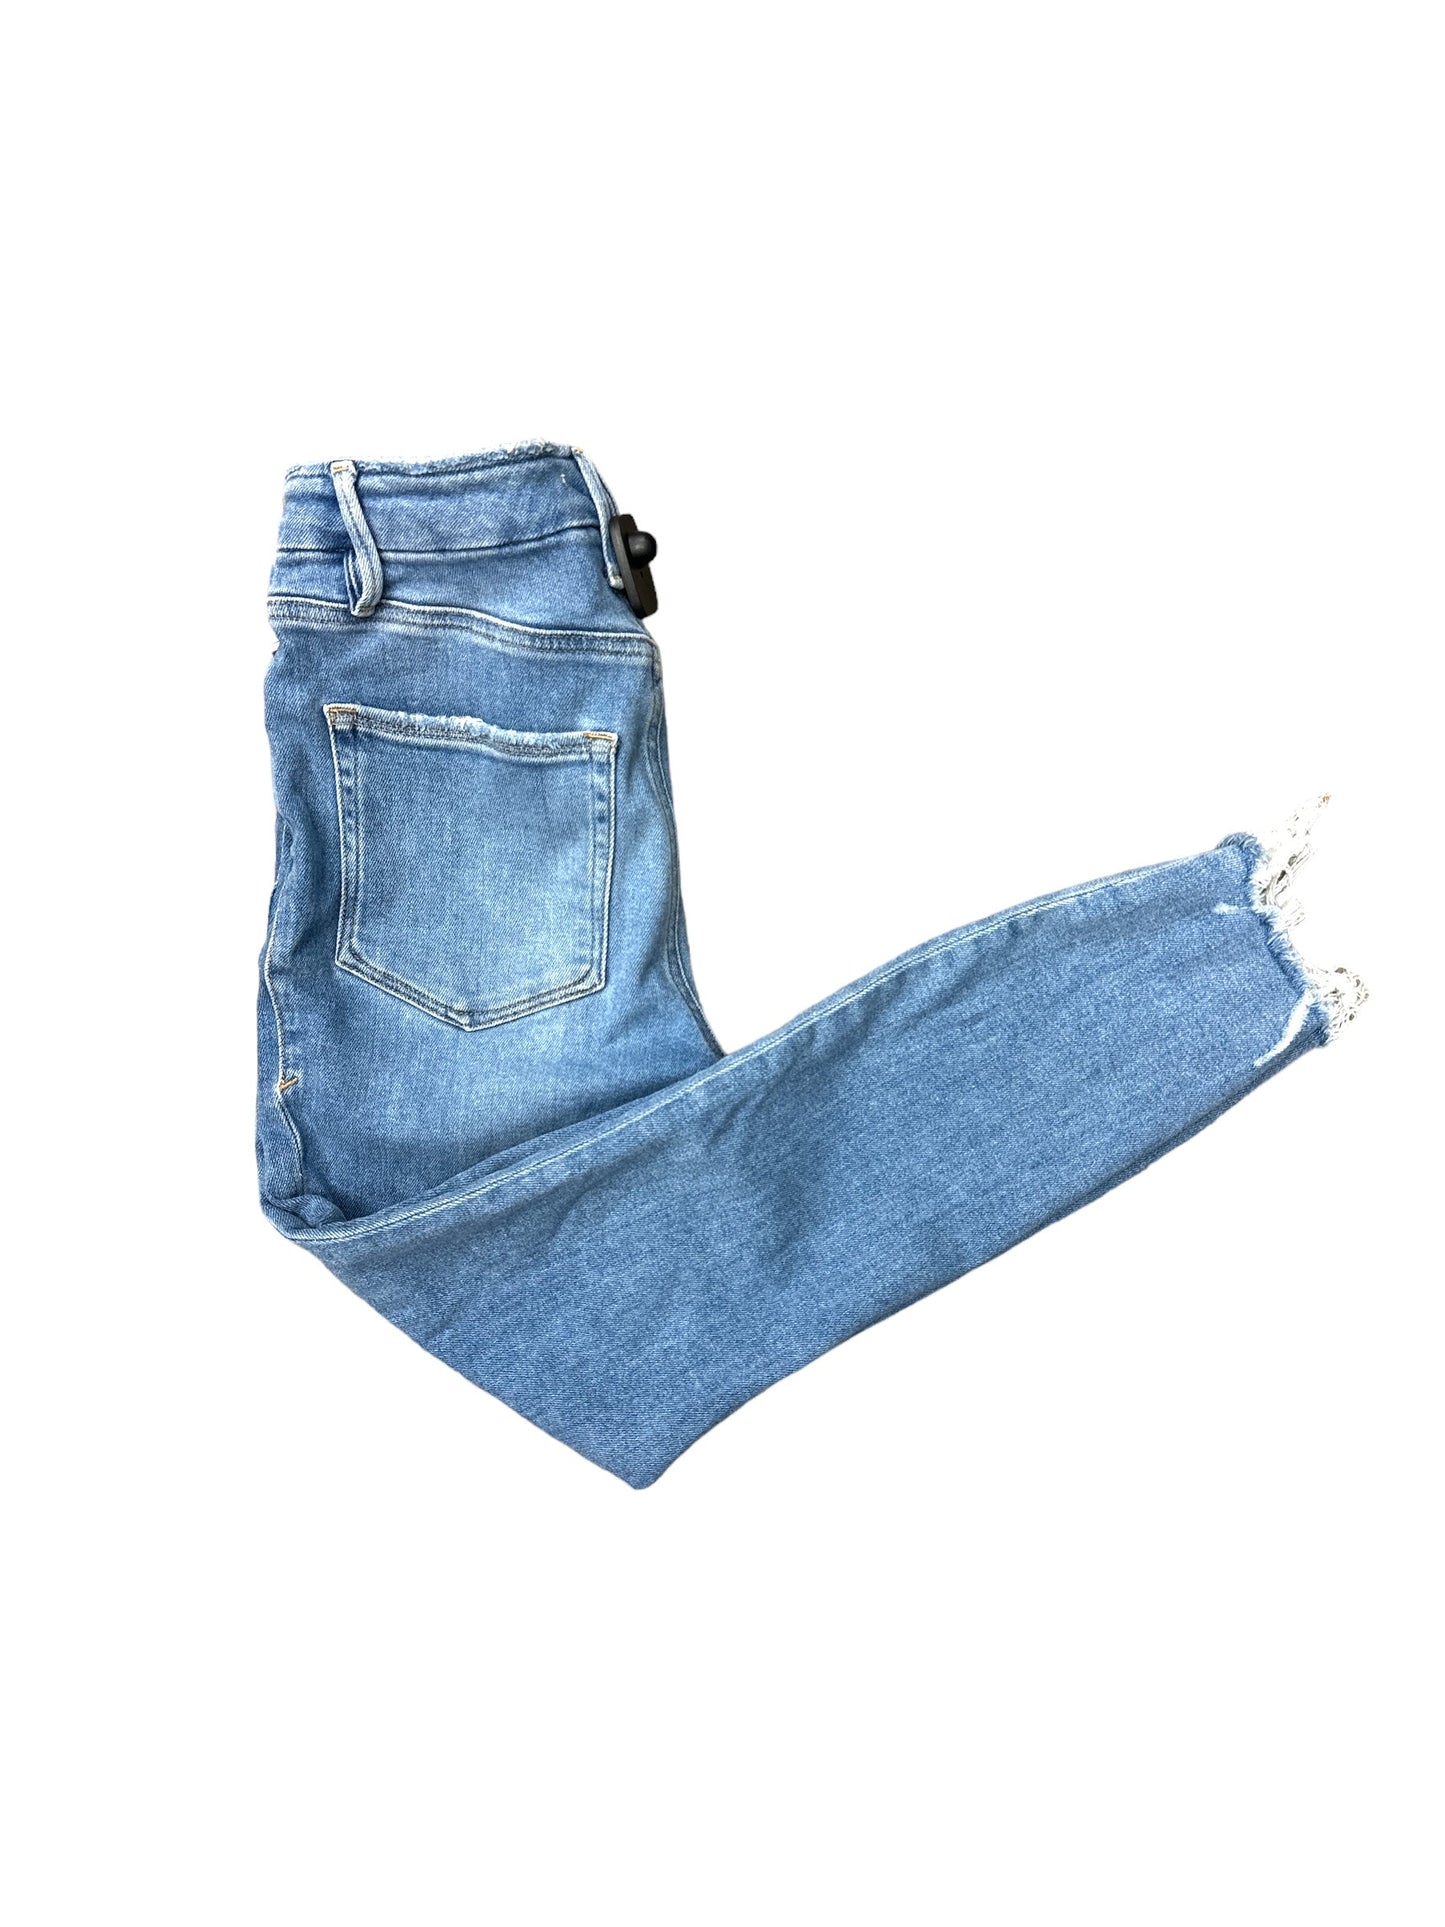 Blue Denim Jeans Designer Good American, Size 6